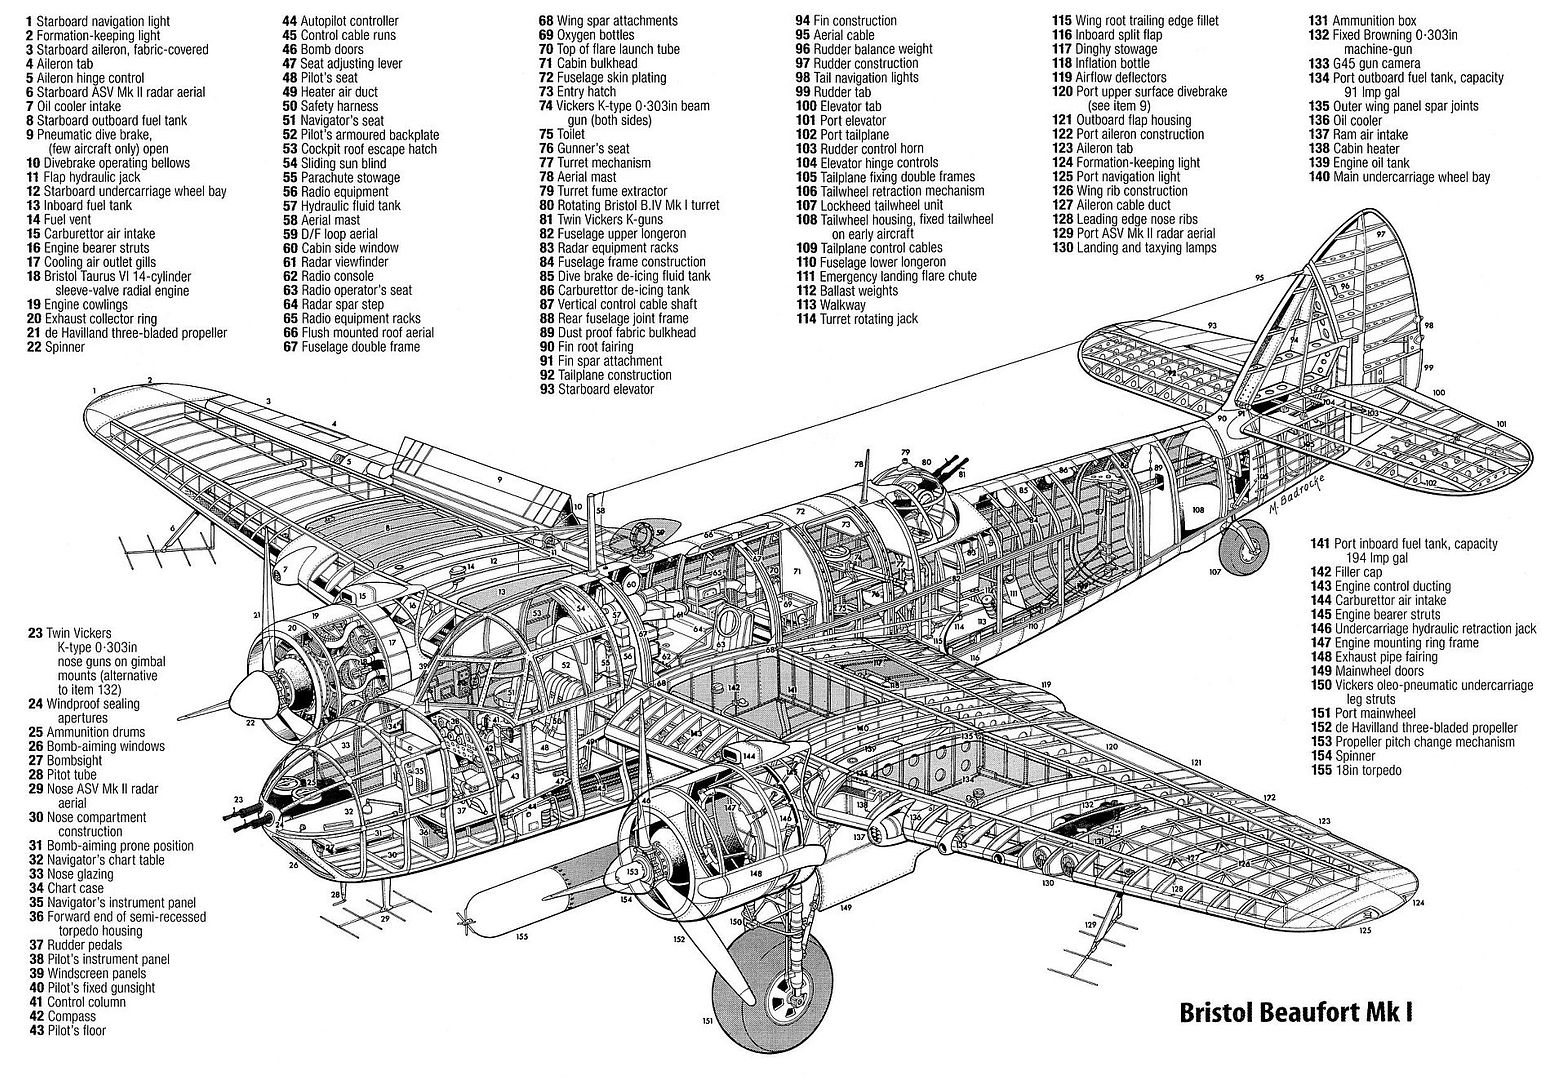 Bristol Beaufort Mk1 Cutaway